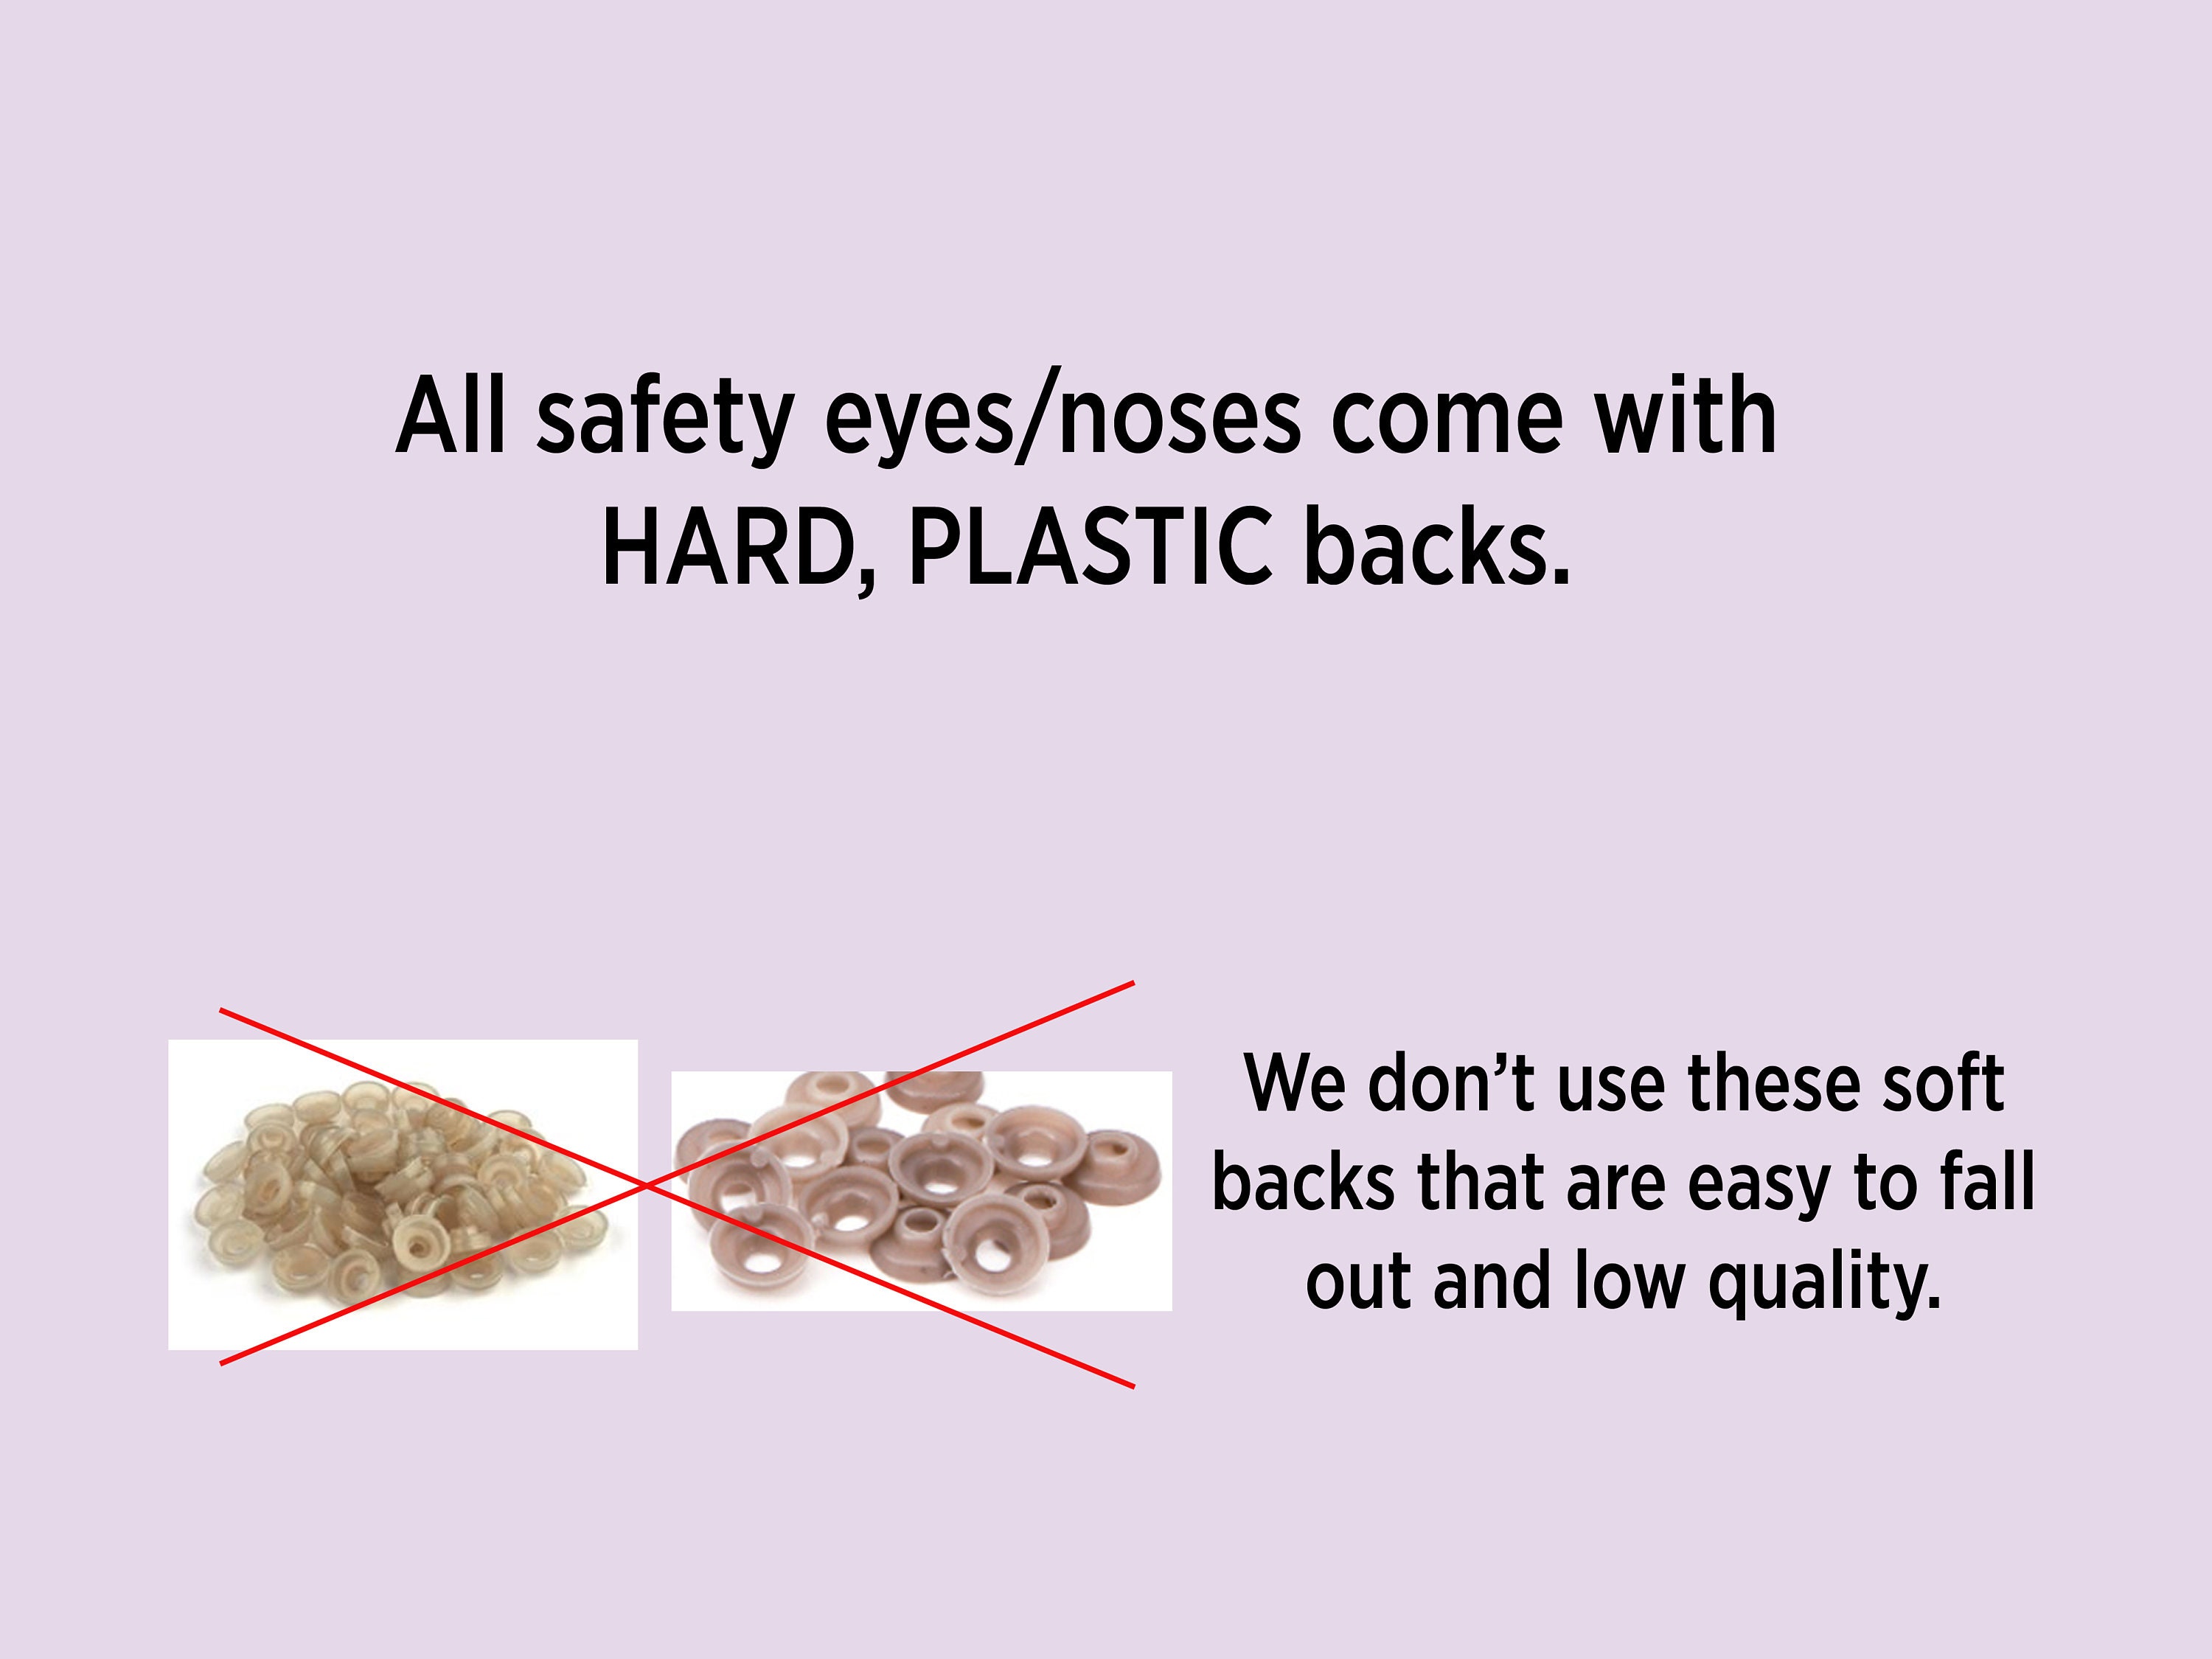 18mm Black Safety Eyes 20 Pairs, Eyes for Stuffed Toys and Animals, Animal  Eyes, Doll Eyes, Plastic Eyes 